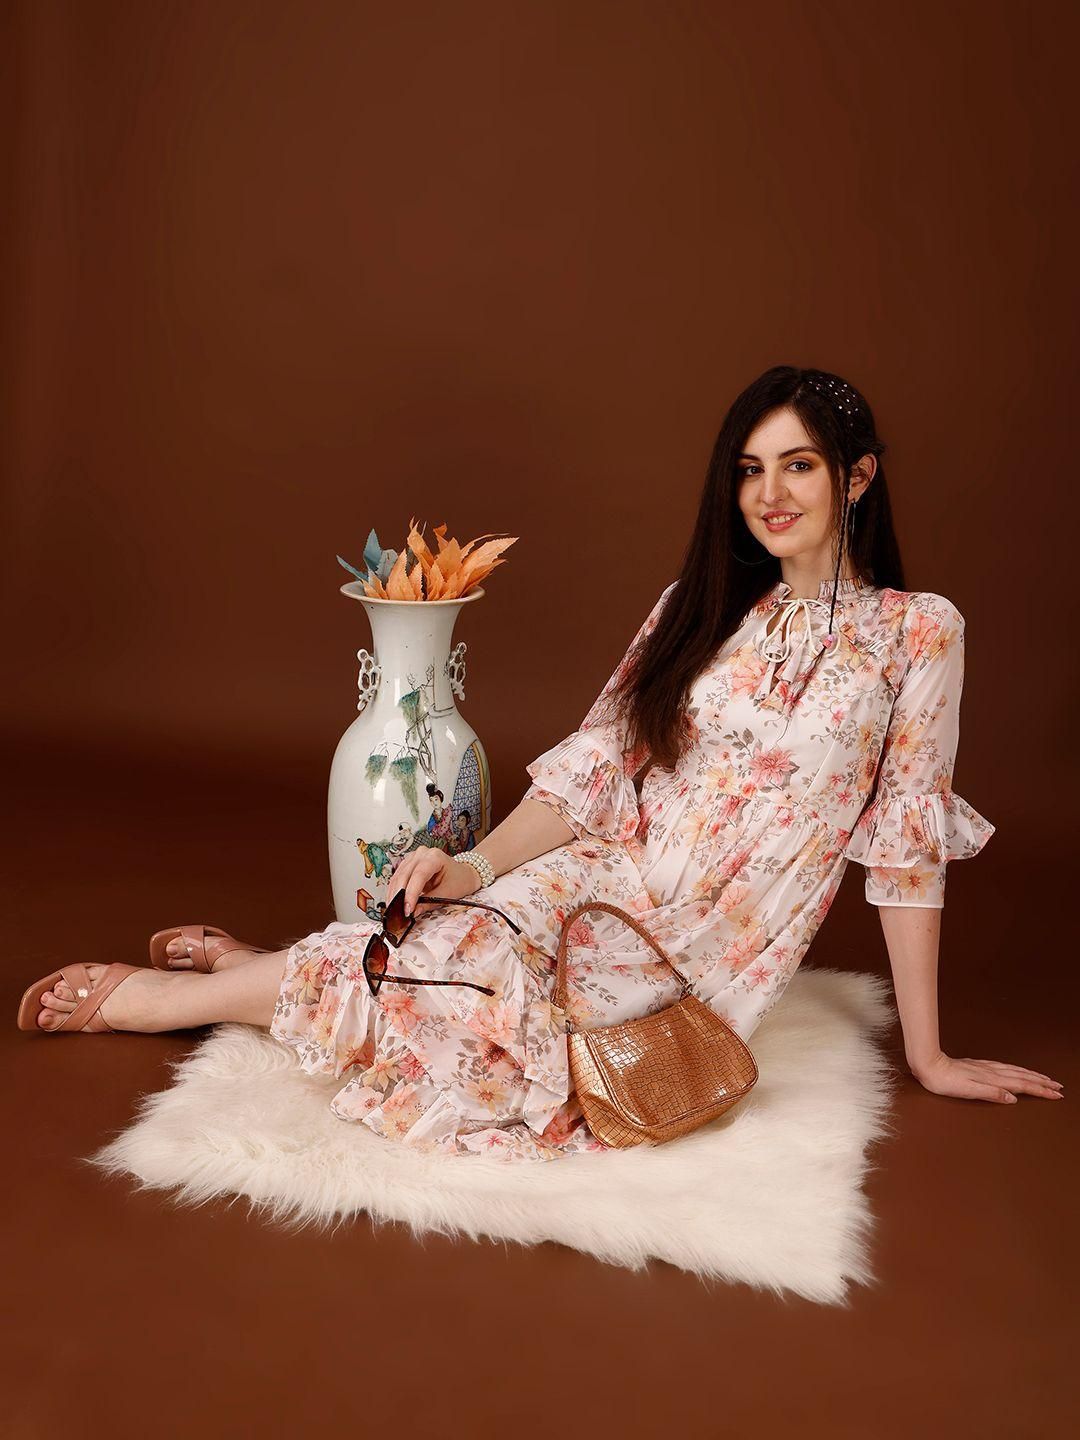 Plus Size Women's Georgette Floral Print Flared Midi Dress - Blossom Mantra